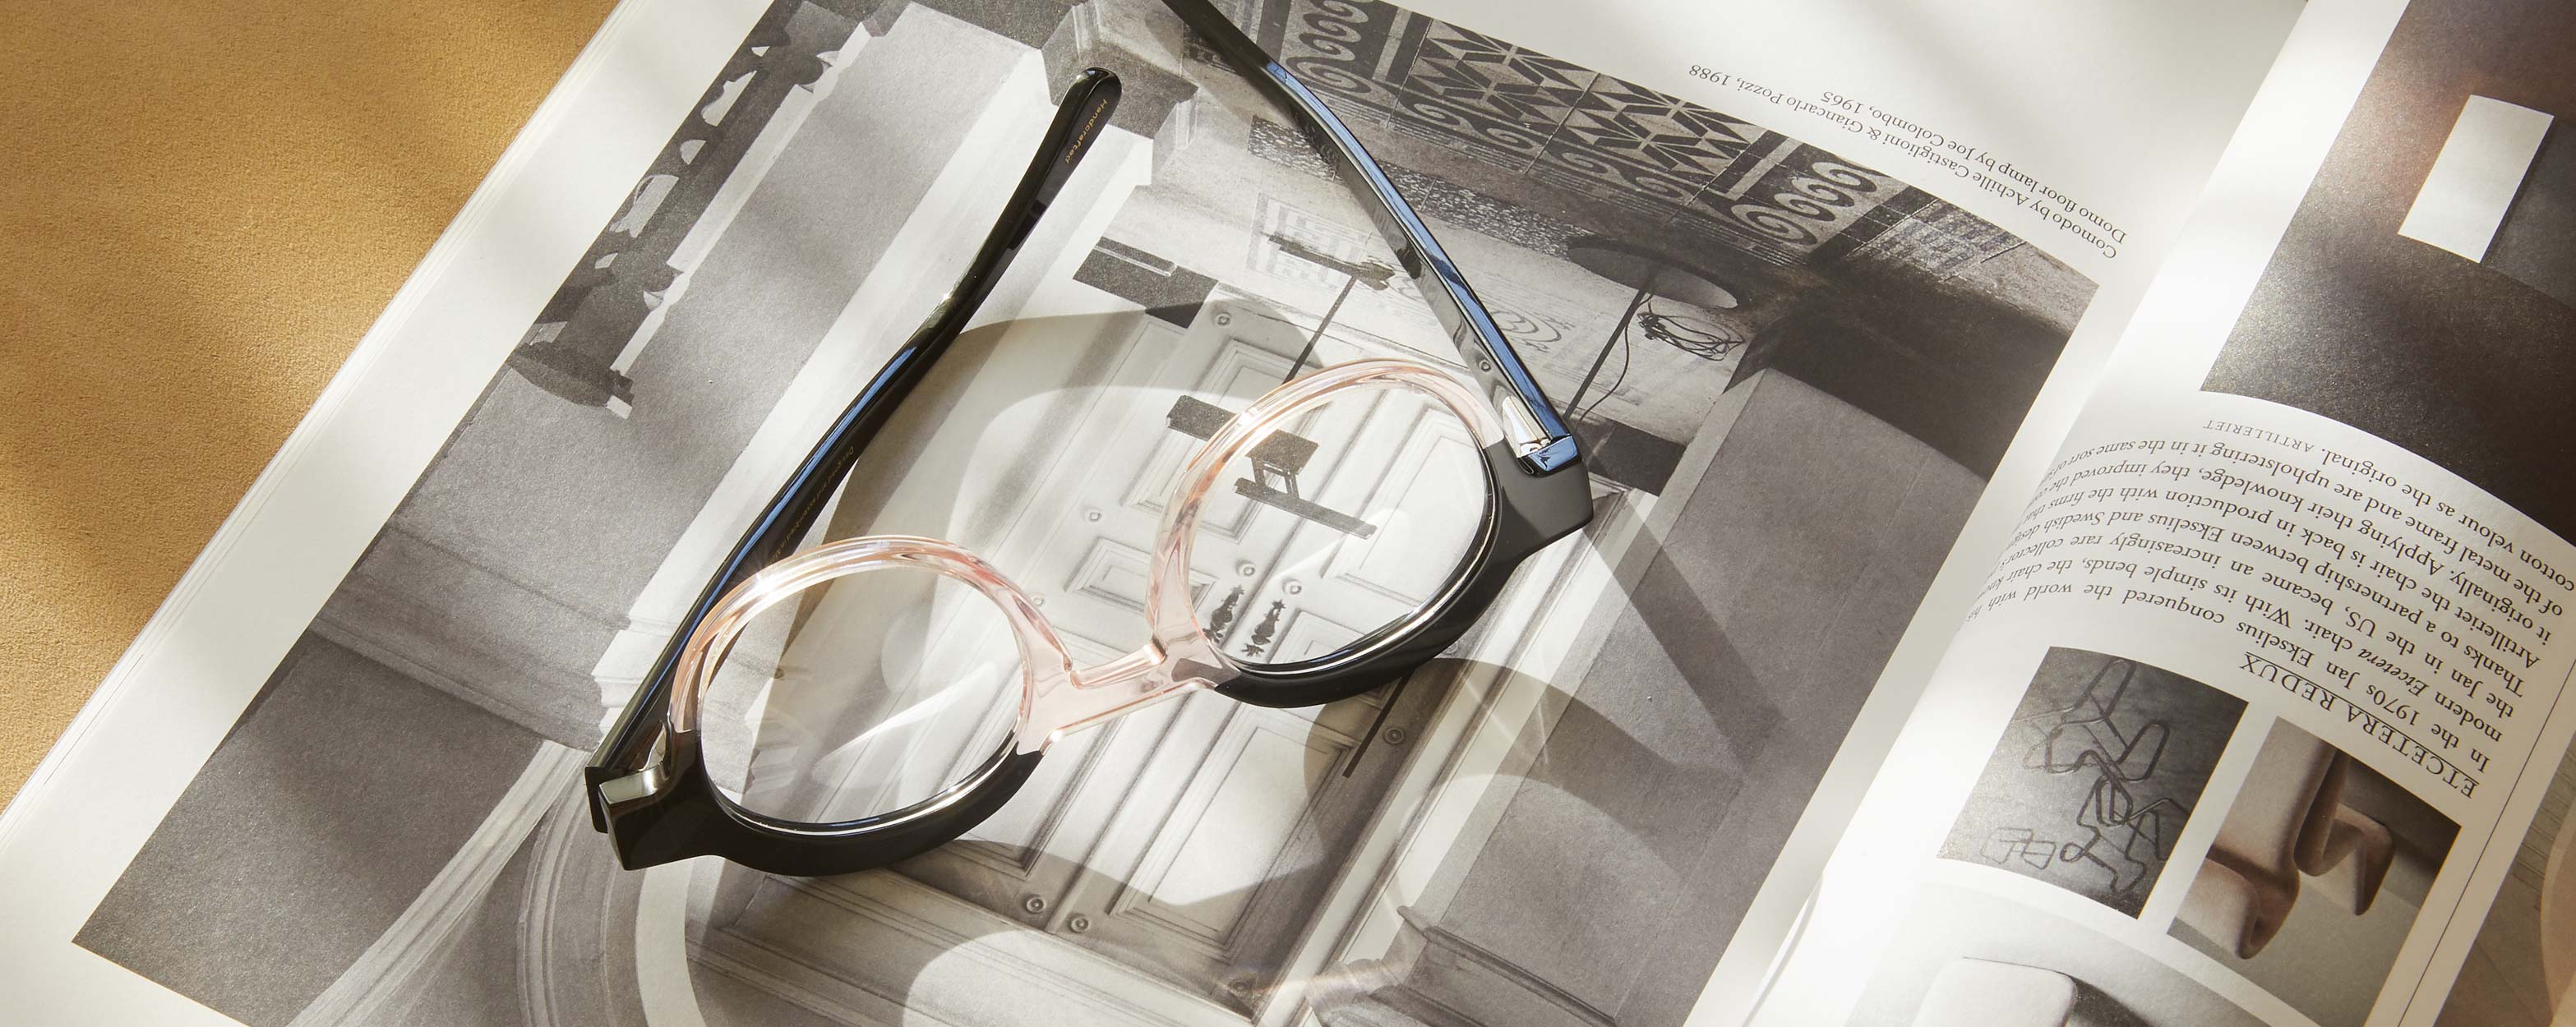 Photo Details of Charlotte Black & Tortoise Reading Glasses in a room